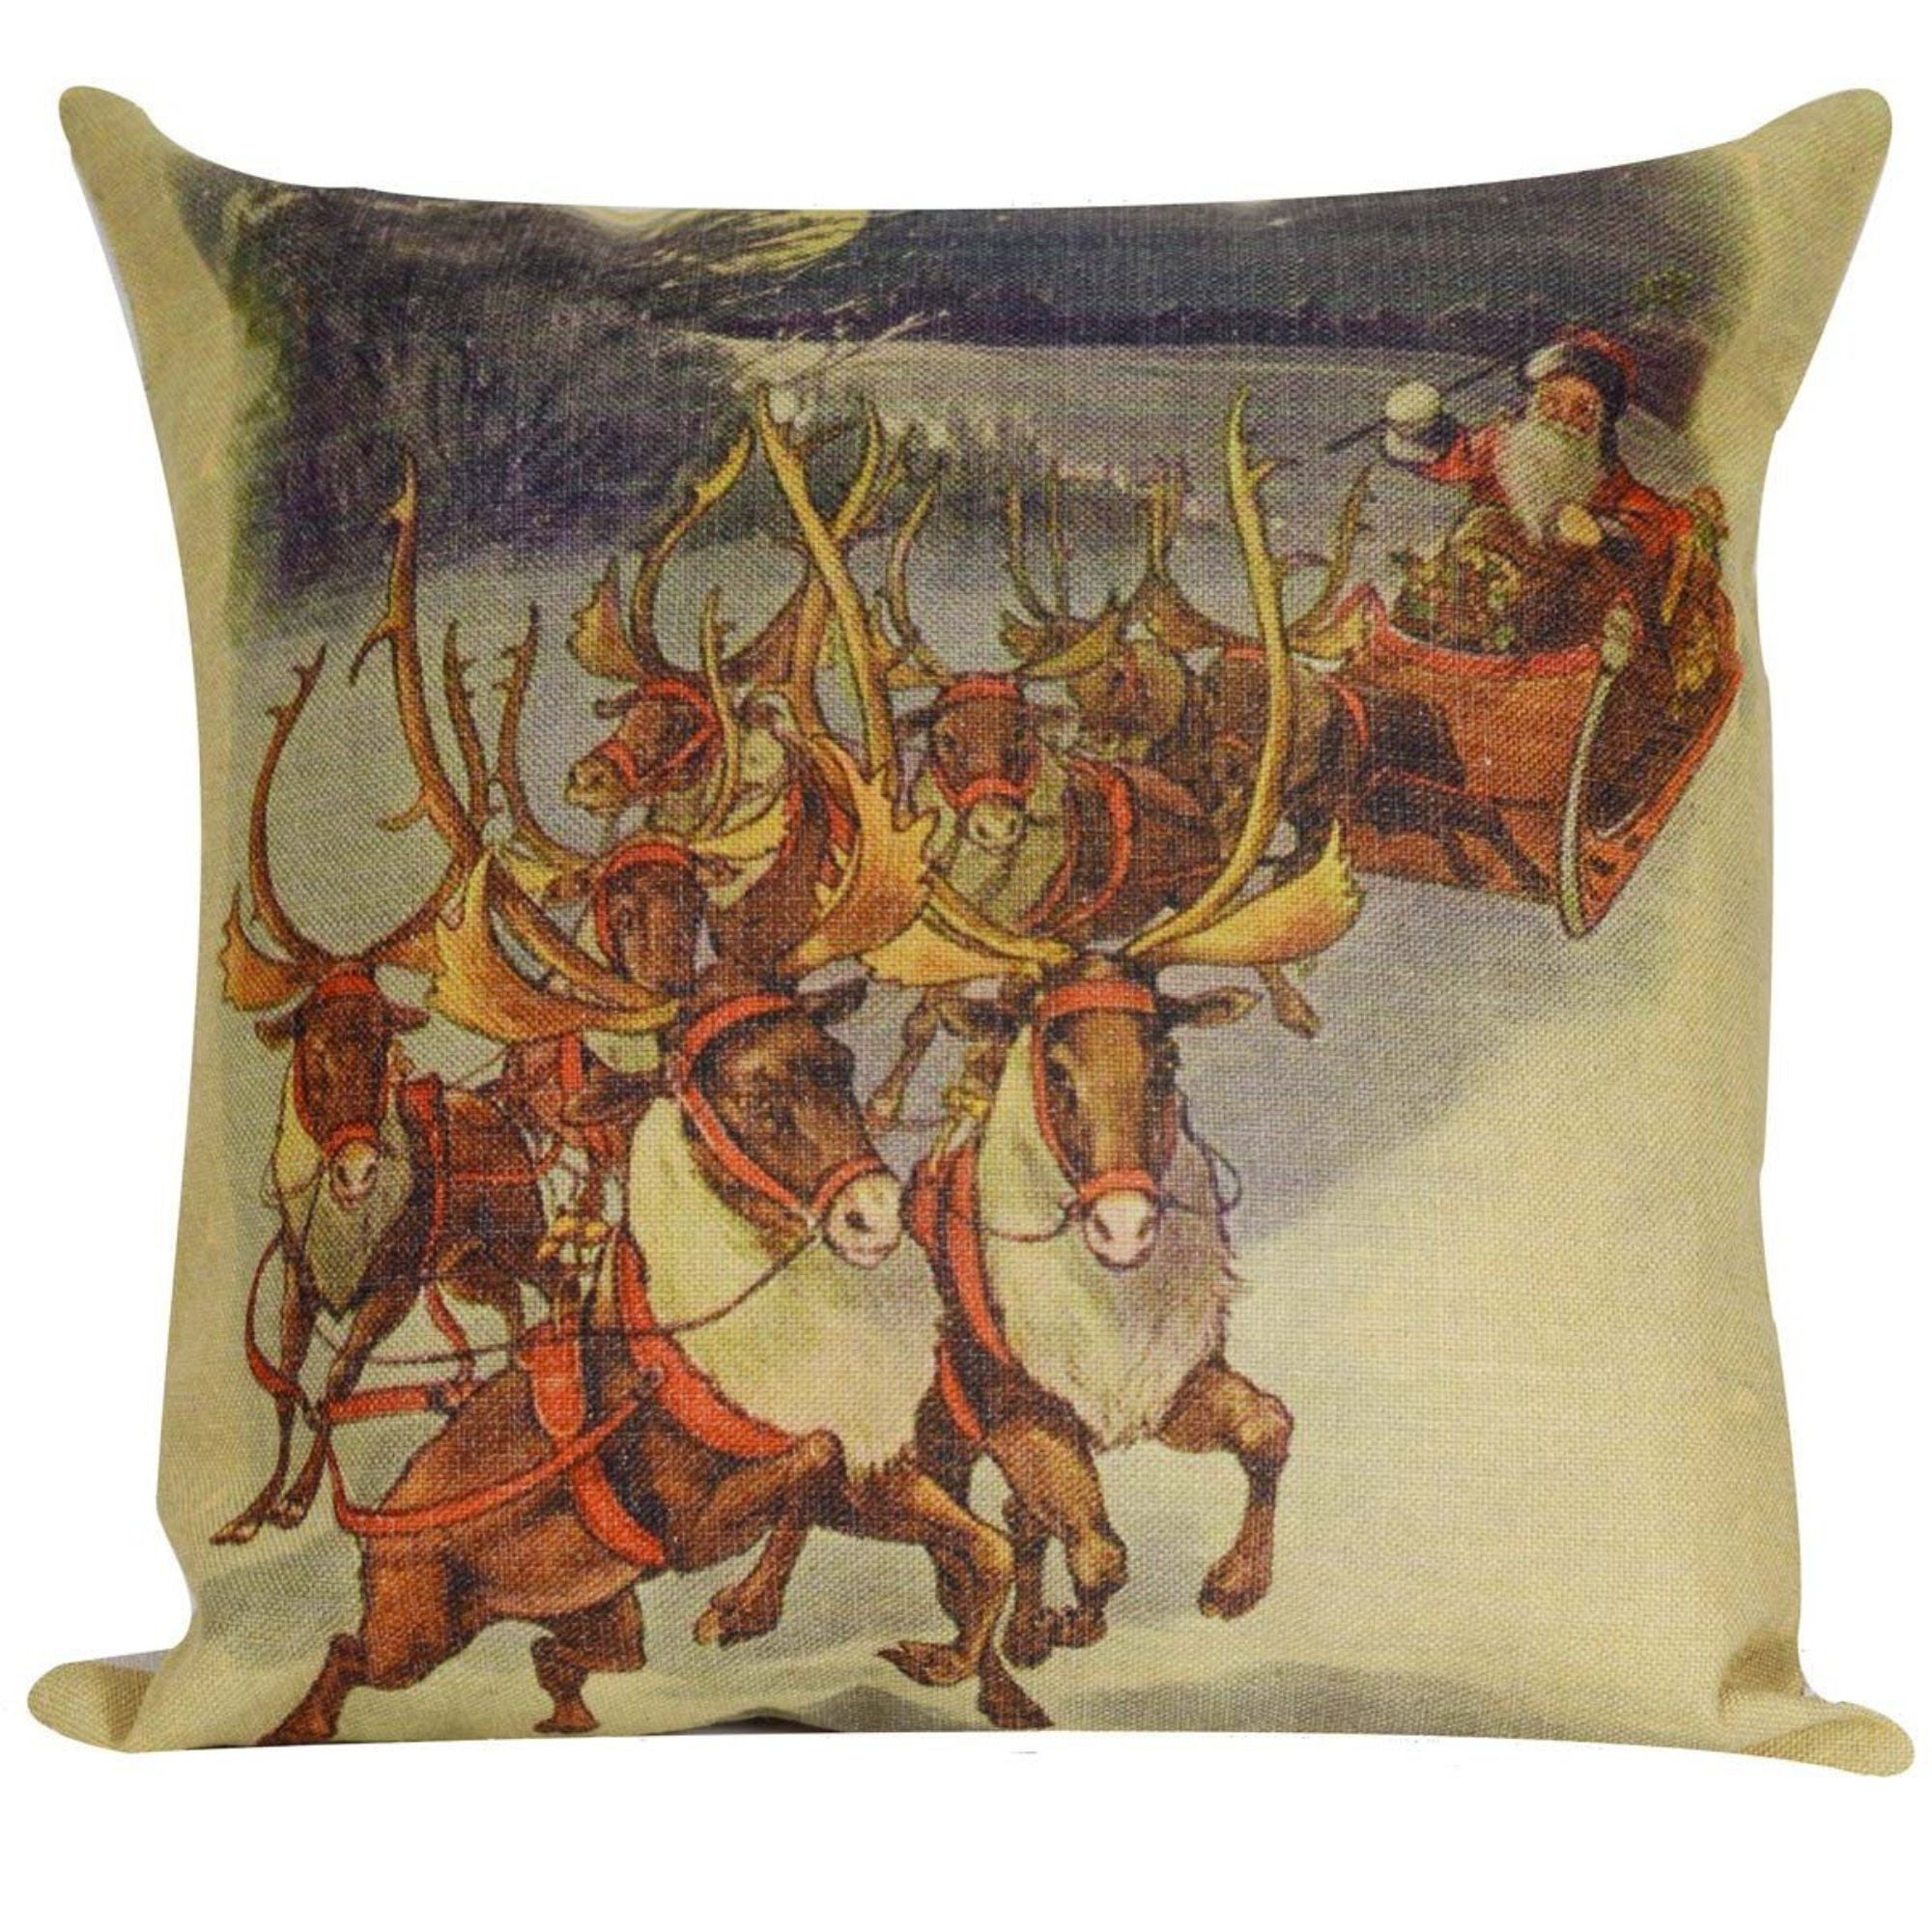 SUNSKYOO Christmas Throw Pillow Cover Cartoon Santa Reindeer Decorative Square Cushion Case,Bakery 